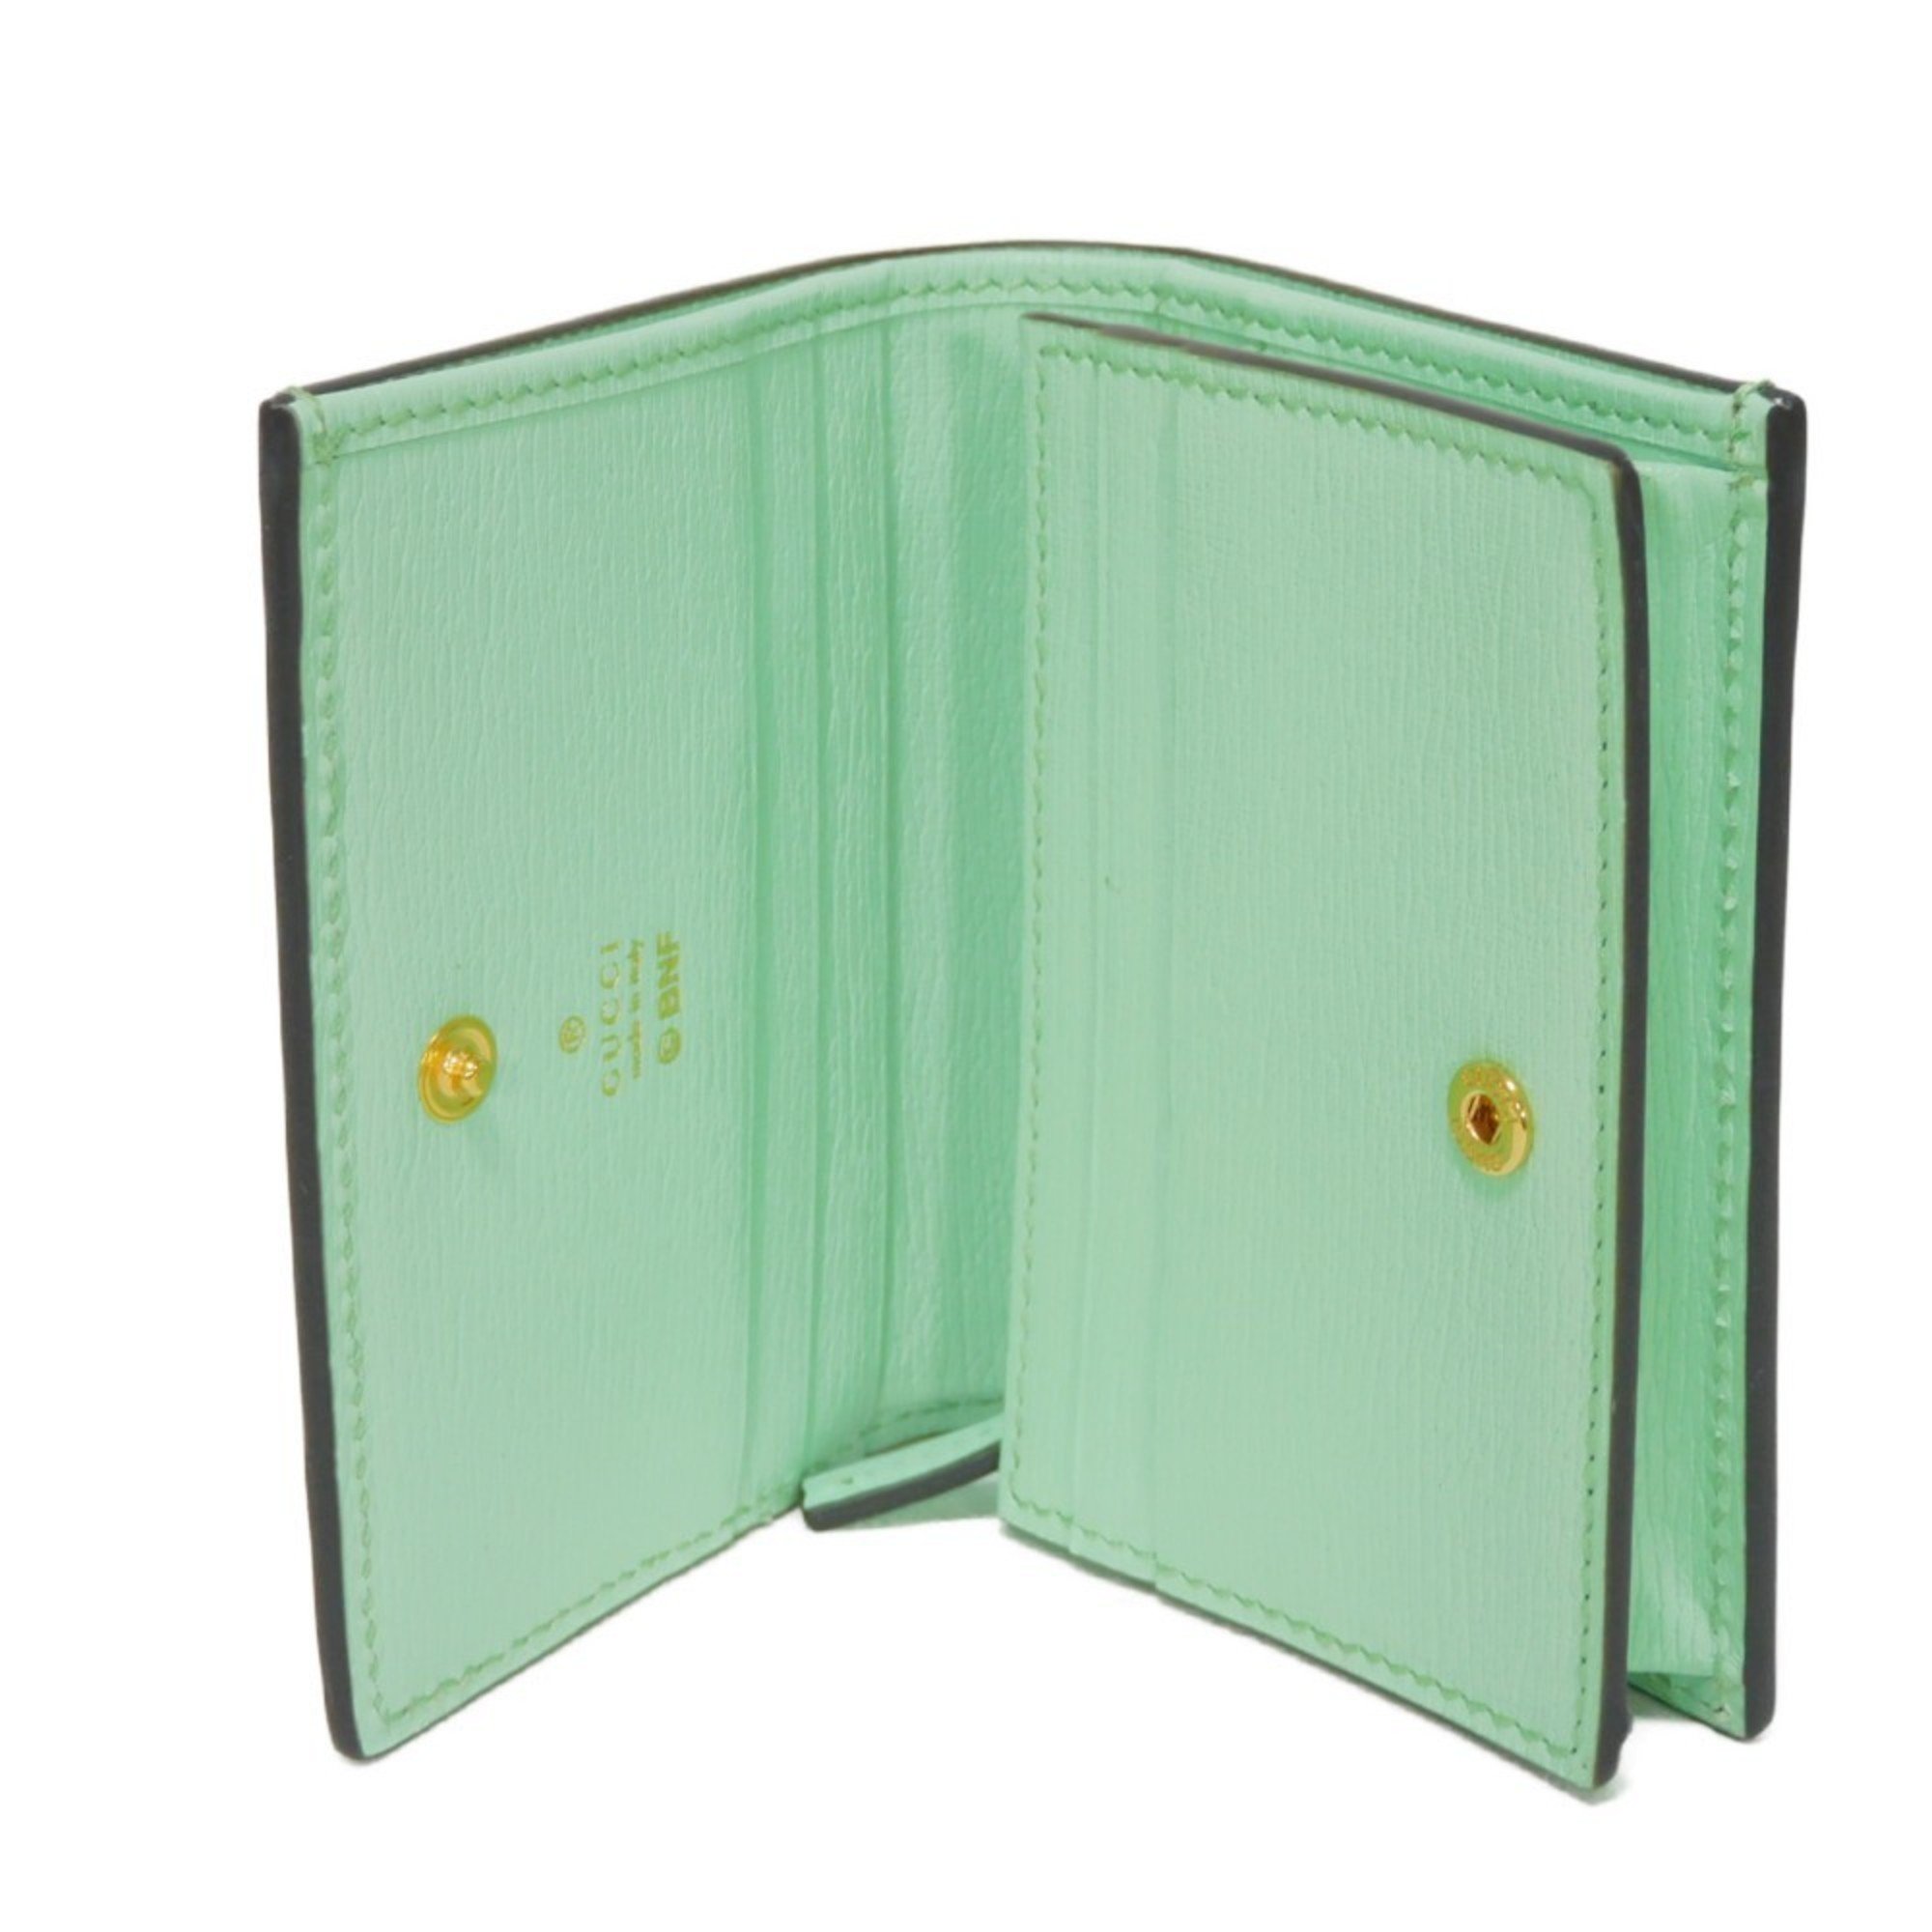 Gucci GUCCI Bi-fold wallet Bananya compact banana cat sakura mochi mint green 701009 U22AG 3067 women's bill compartment